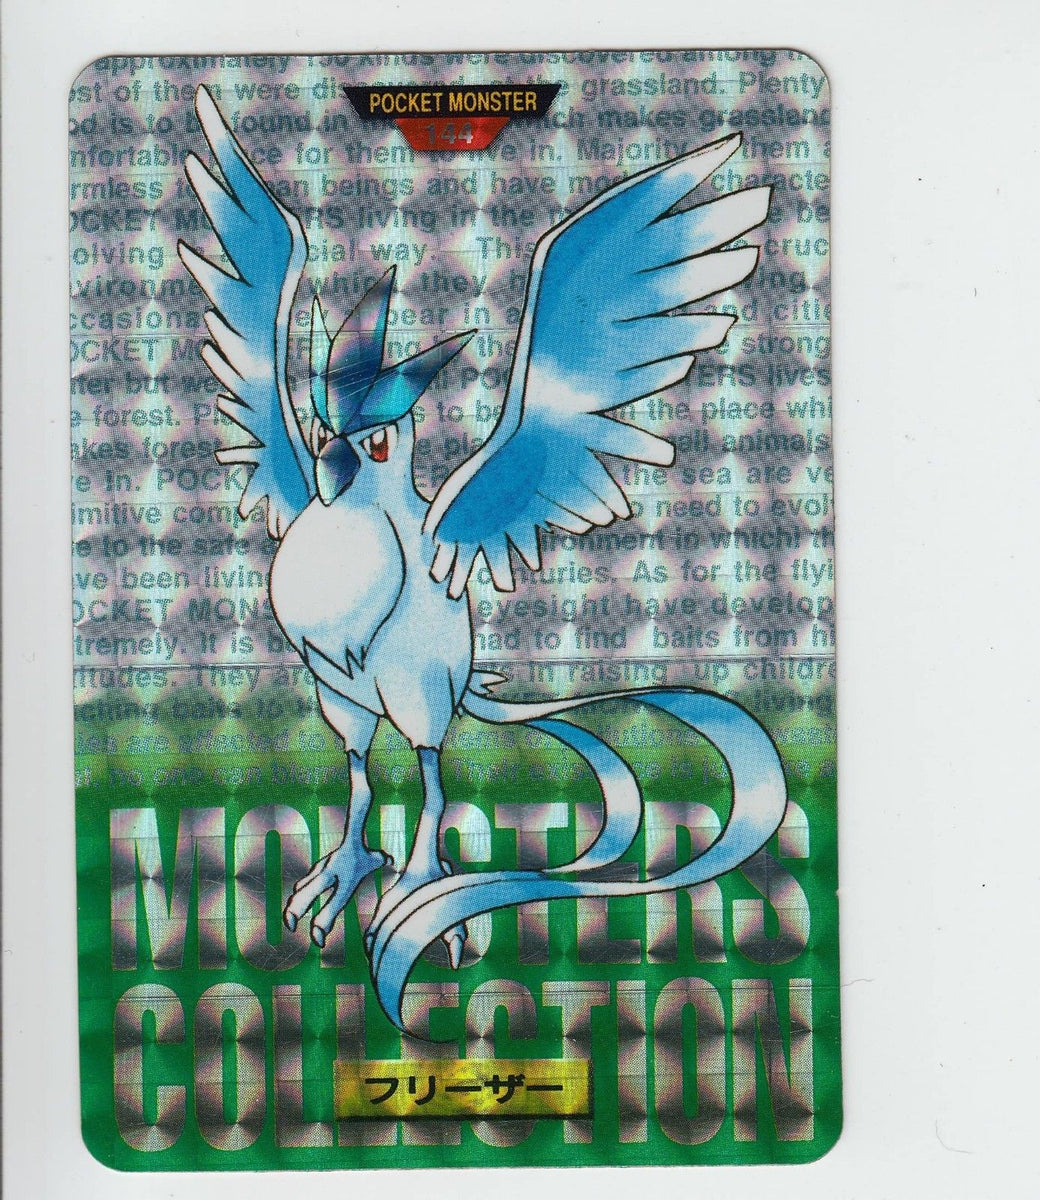 Pokemon Card - #144 Articuno Shiny by Nova-Nebulas on DeviantArt